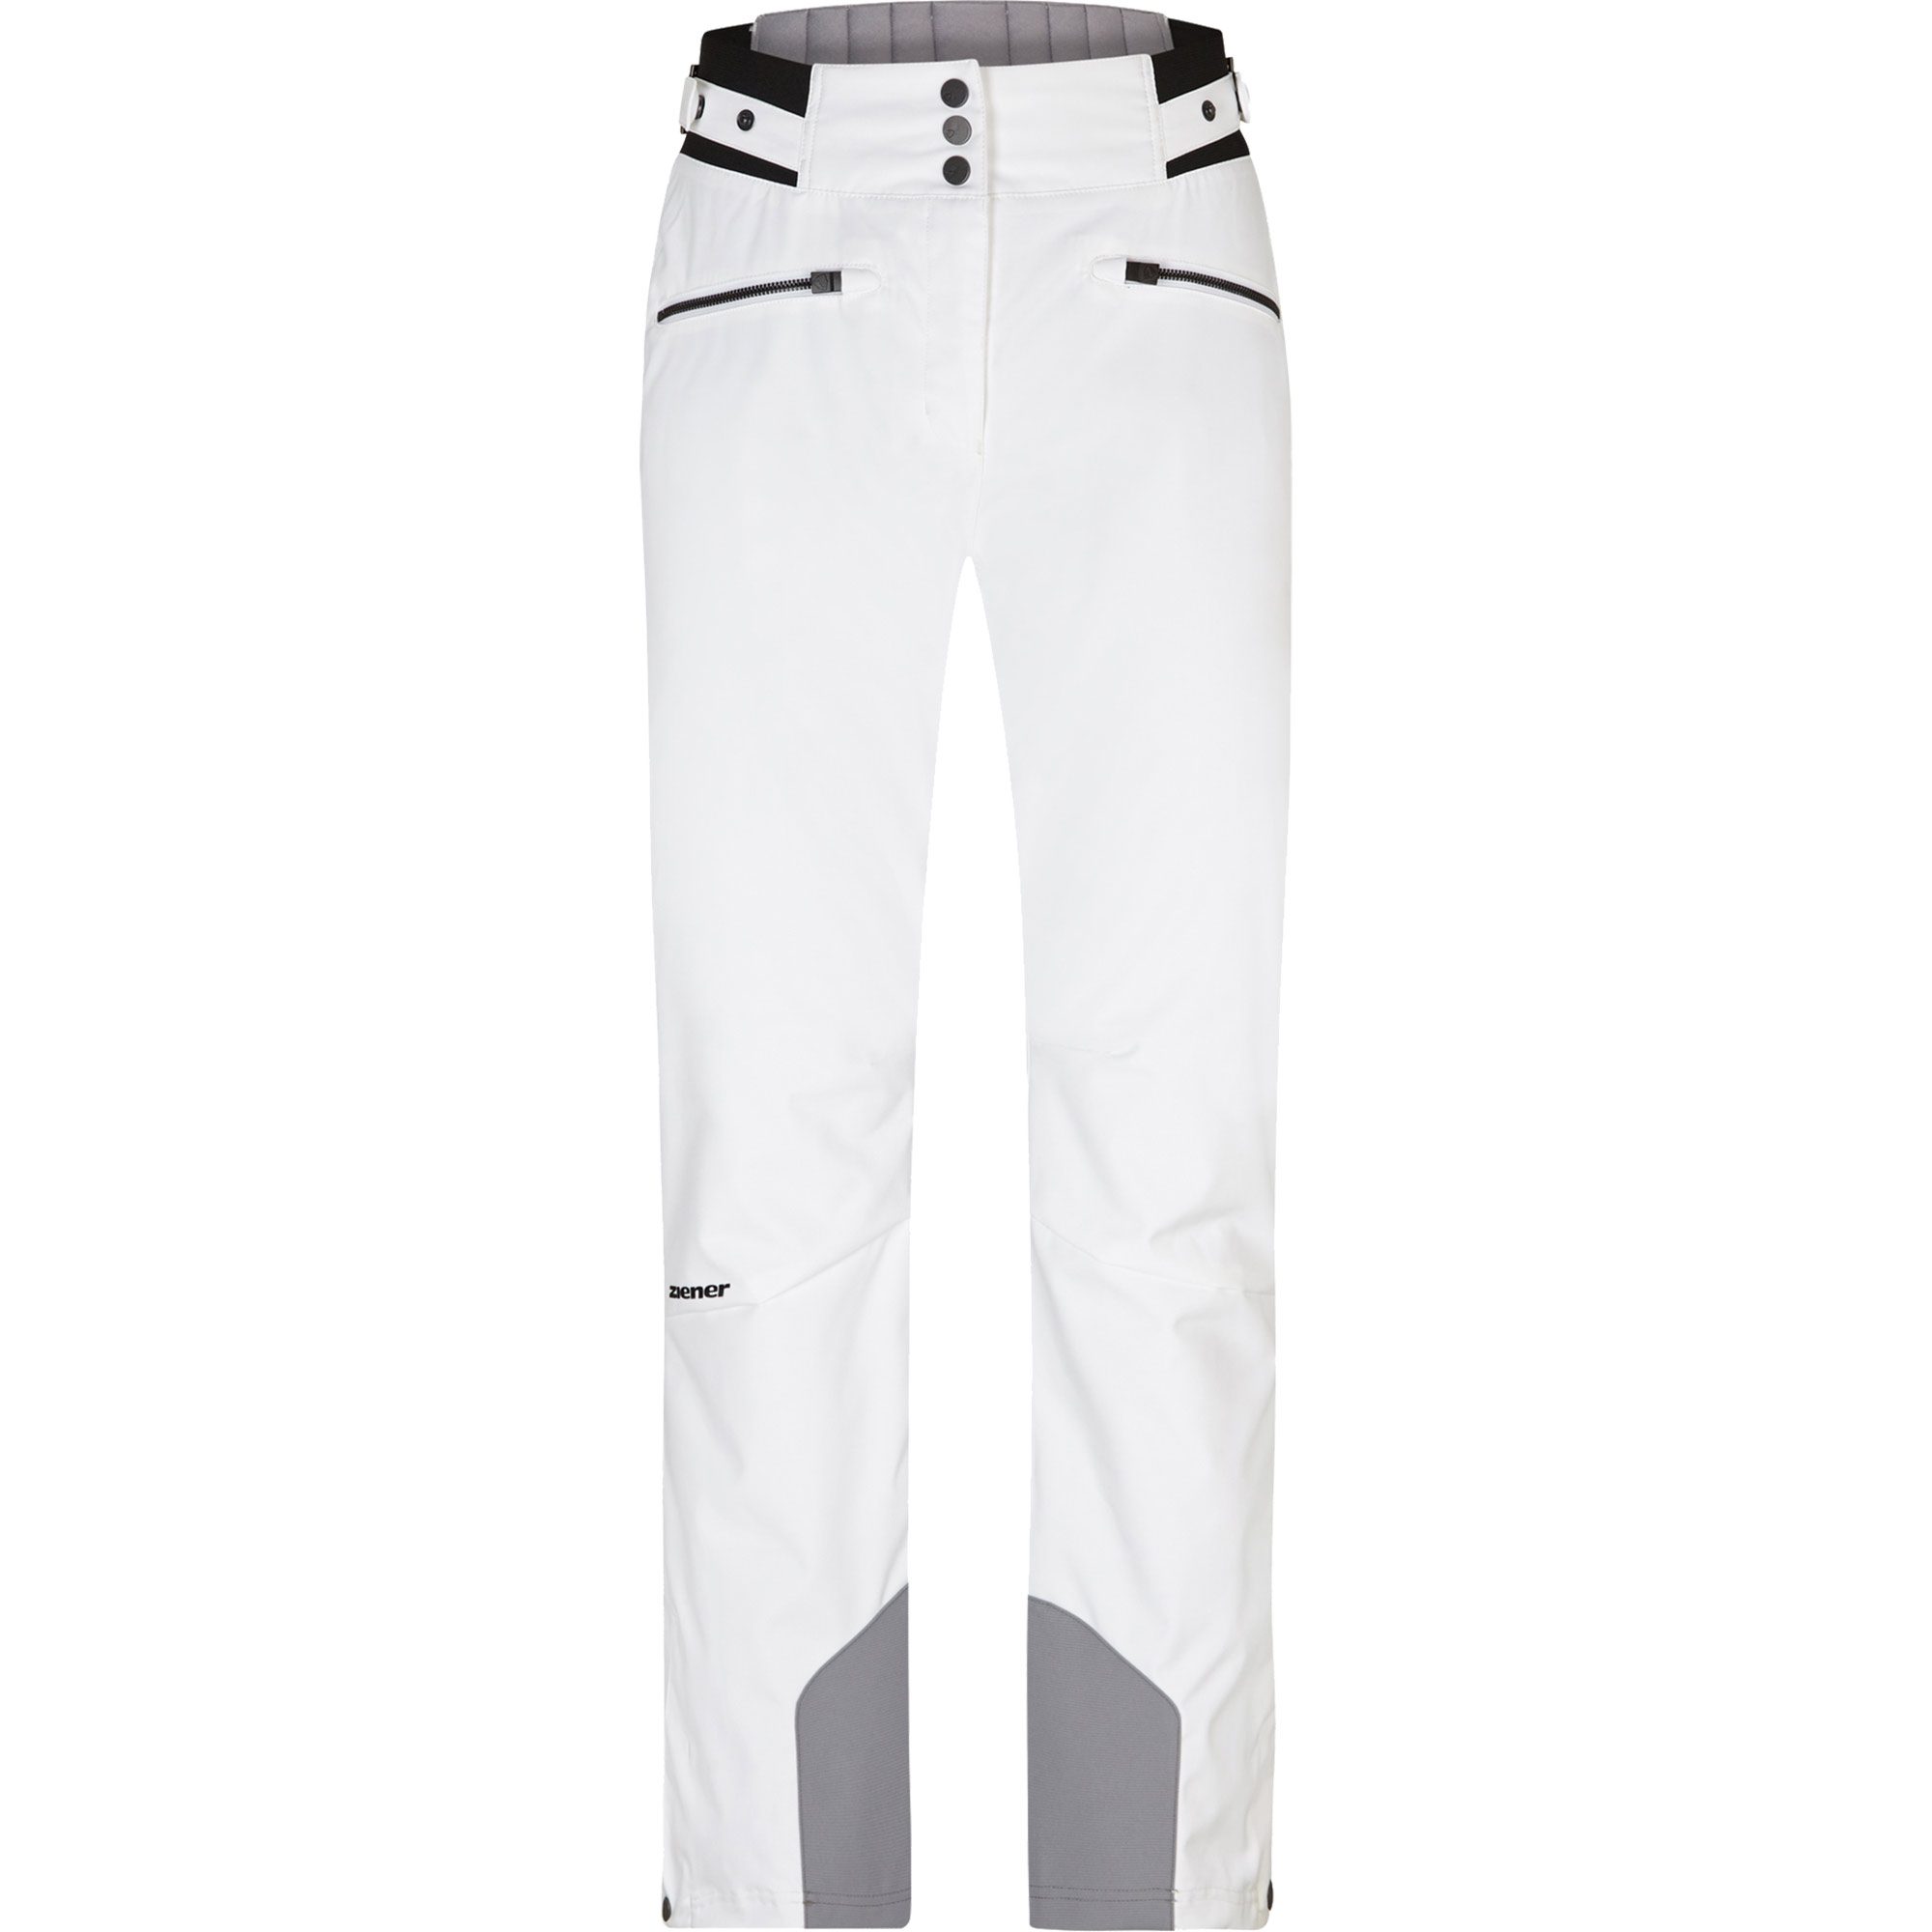 Ziener - Tilla Lady Ski Pants Women white at Sport Bittl Shop | Schneehosen